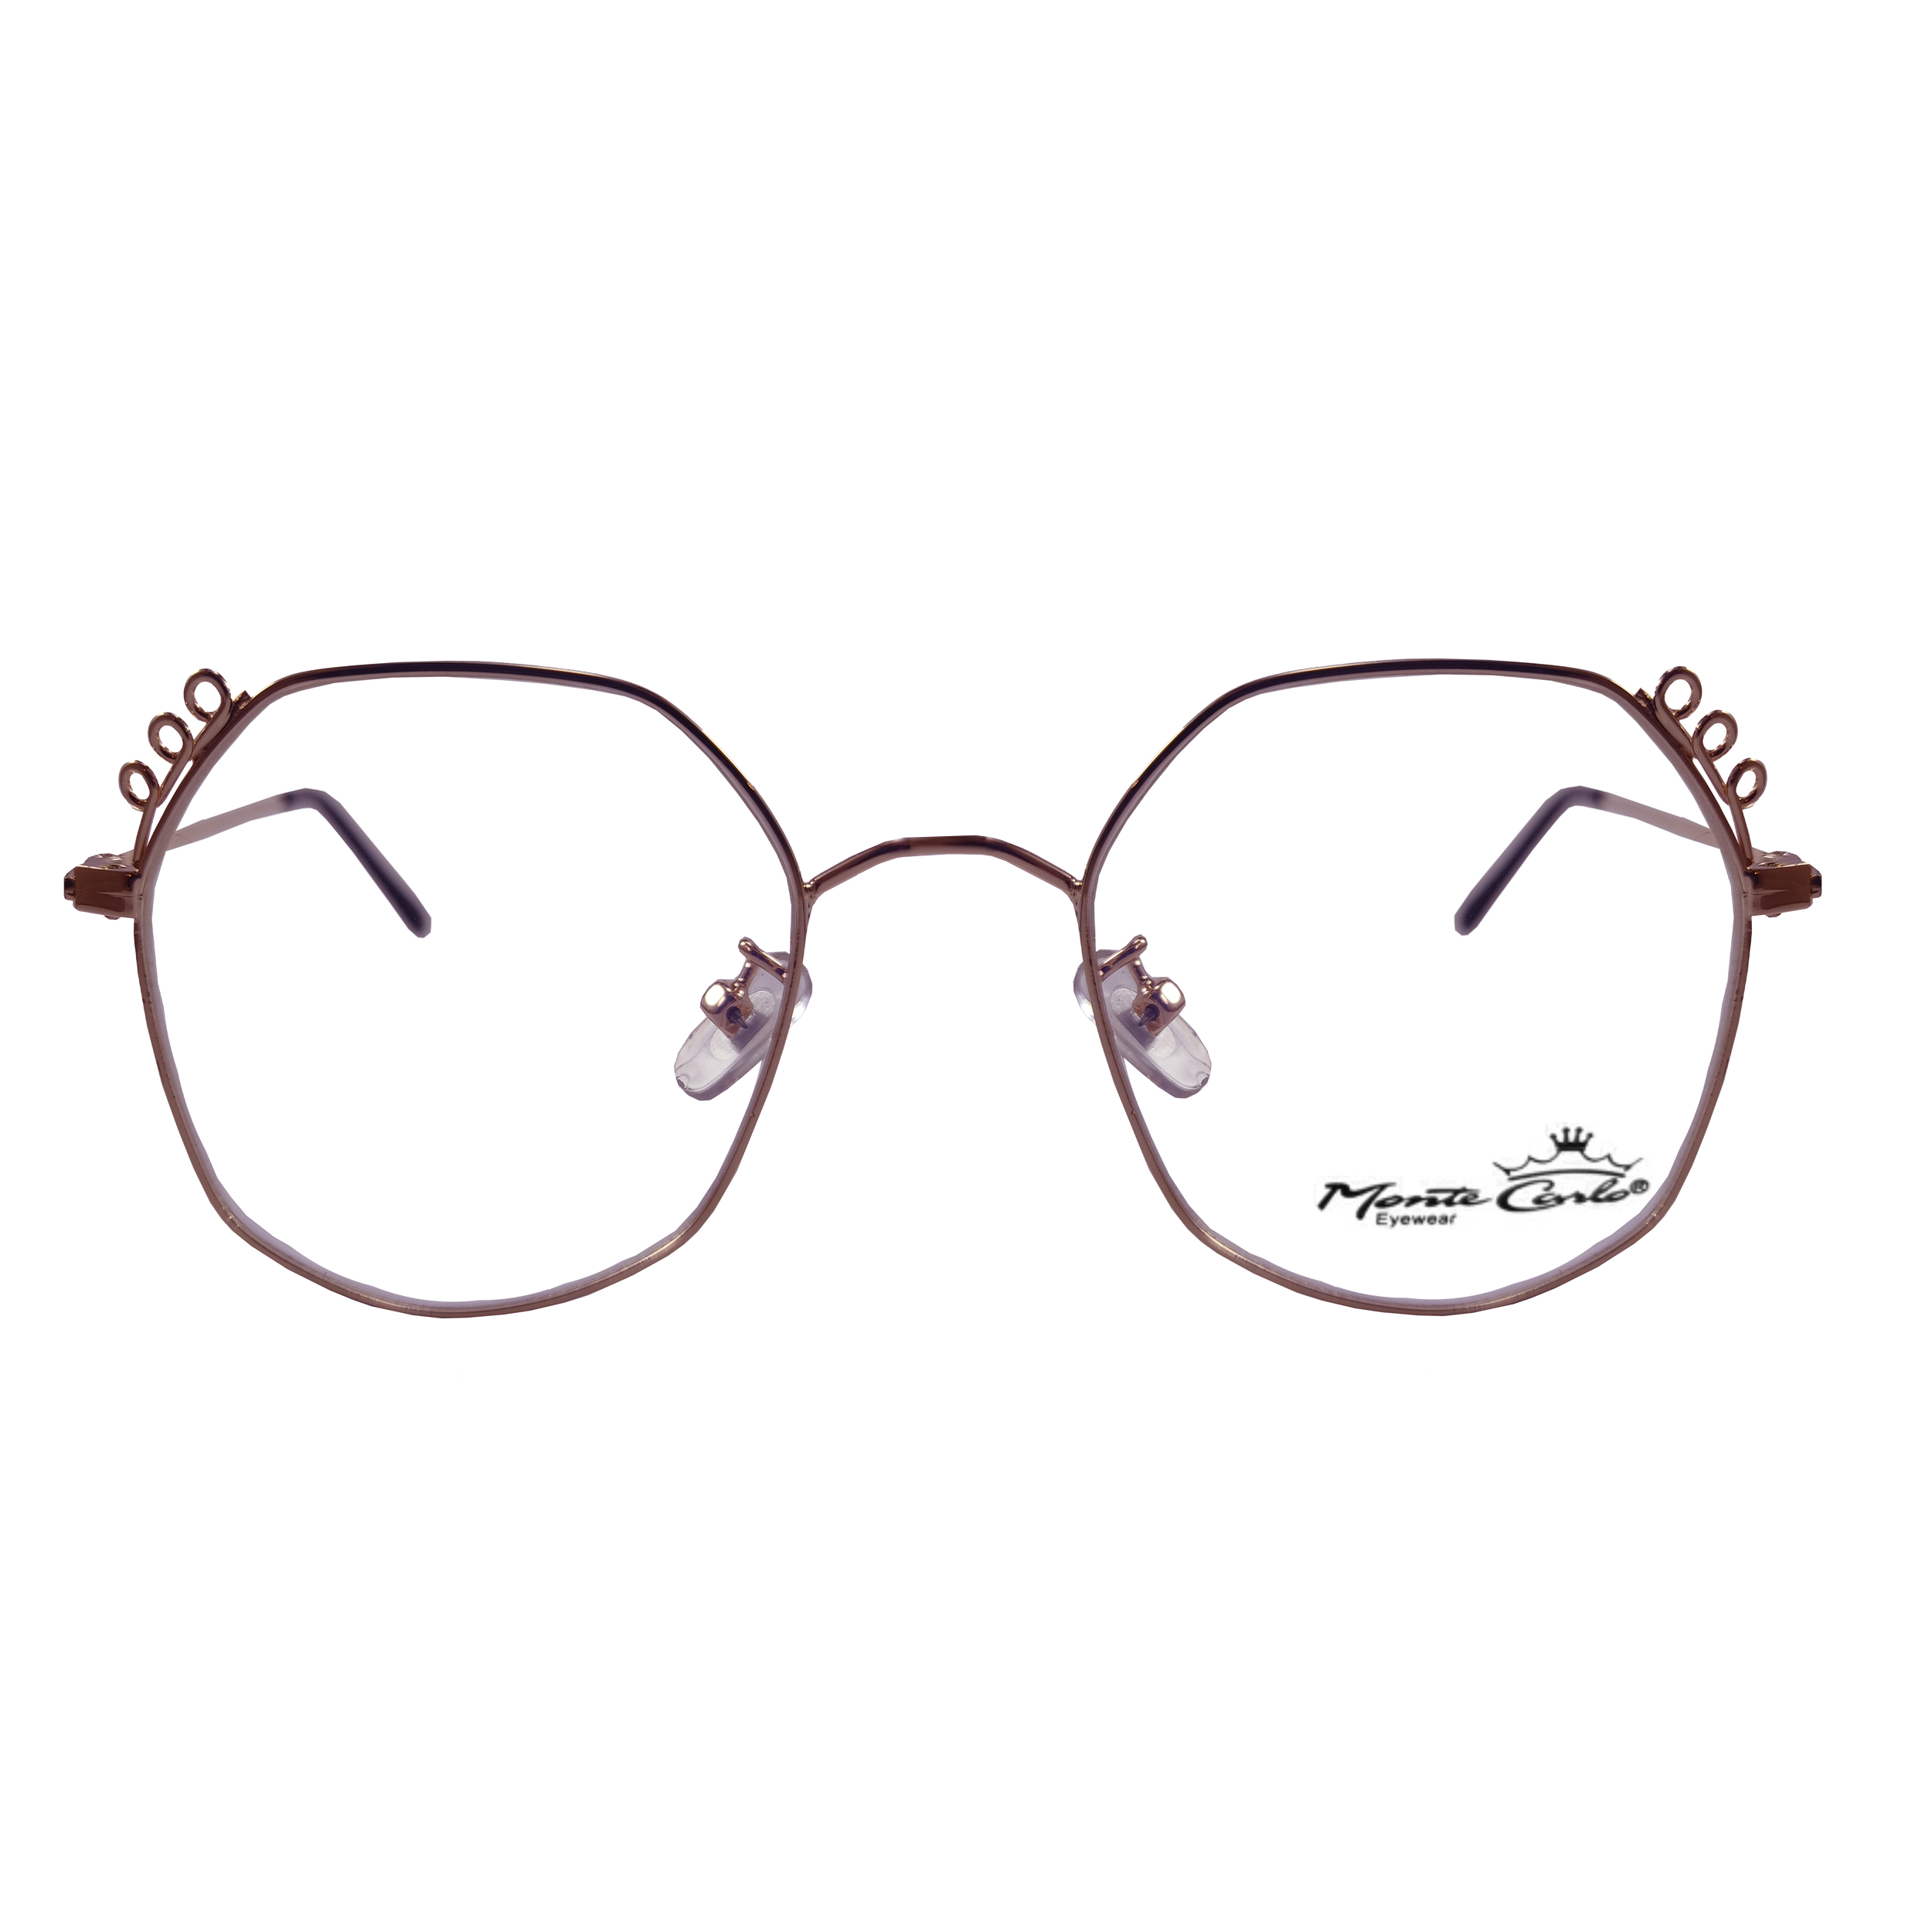  فریم عینک طبی مونته کارلو مدل 9049 کد 114